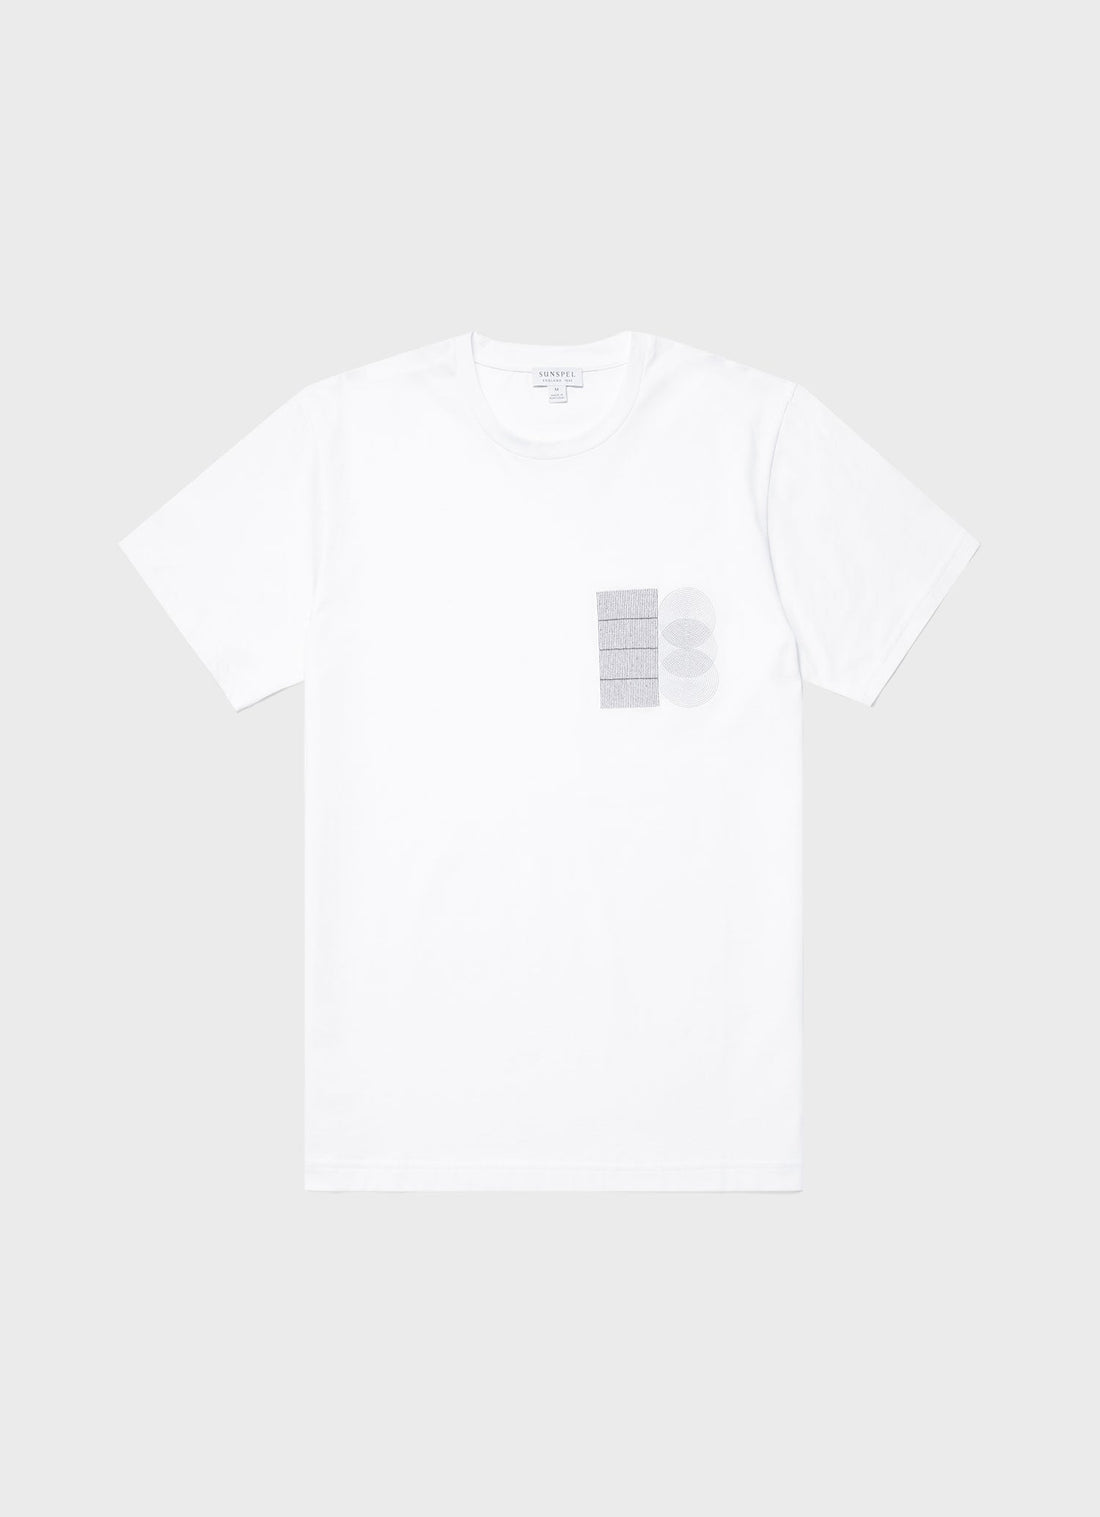 Men's Craig Ward Embroidered T-shirt in White